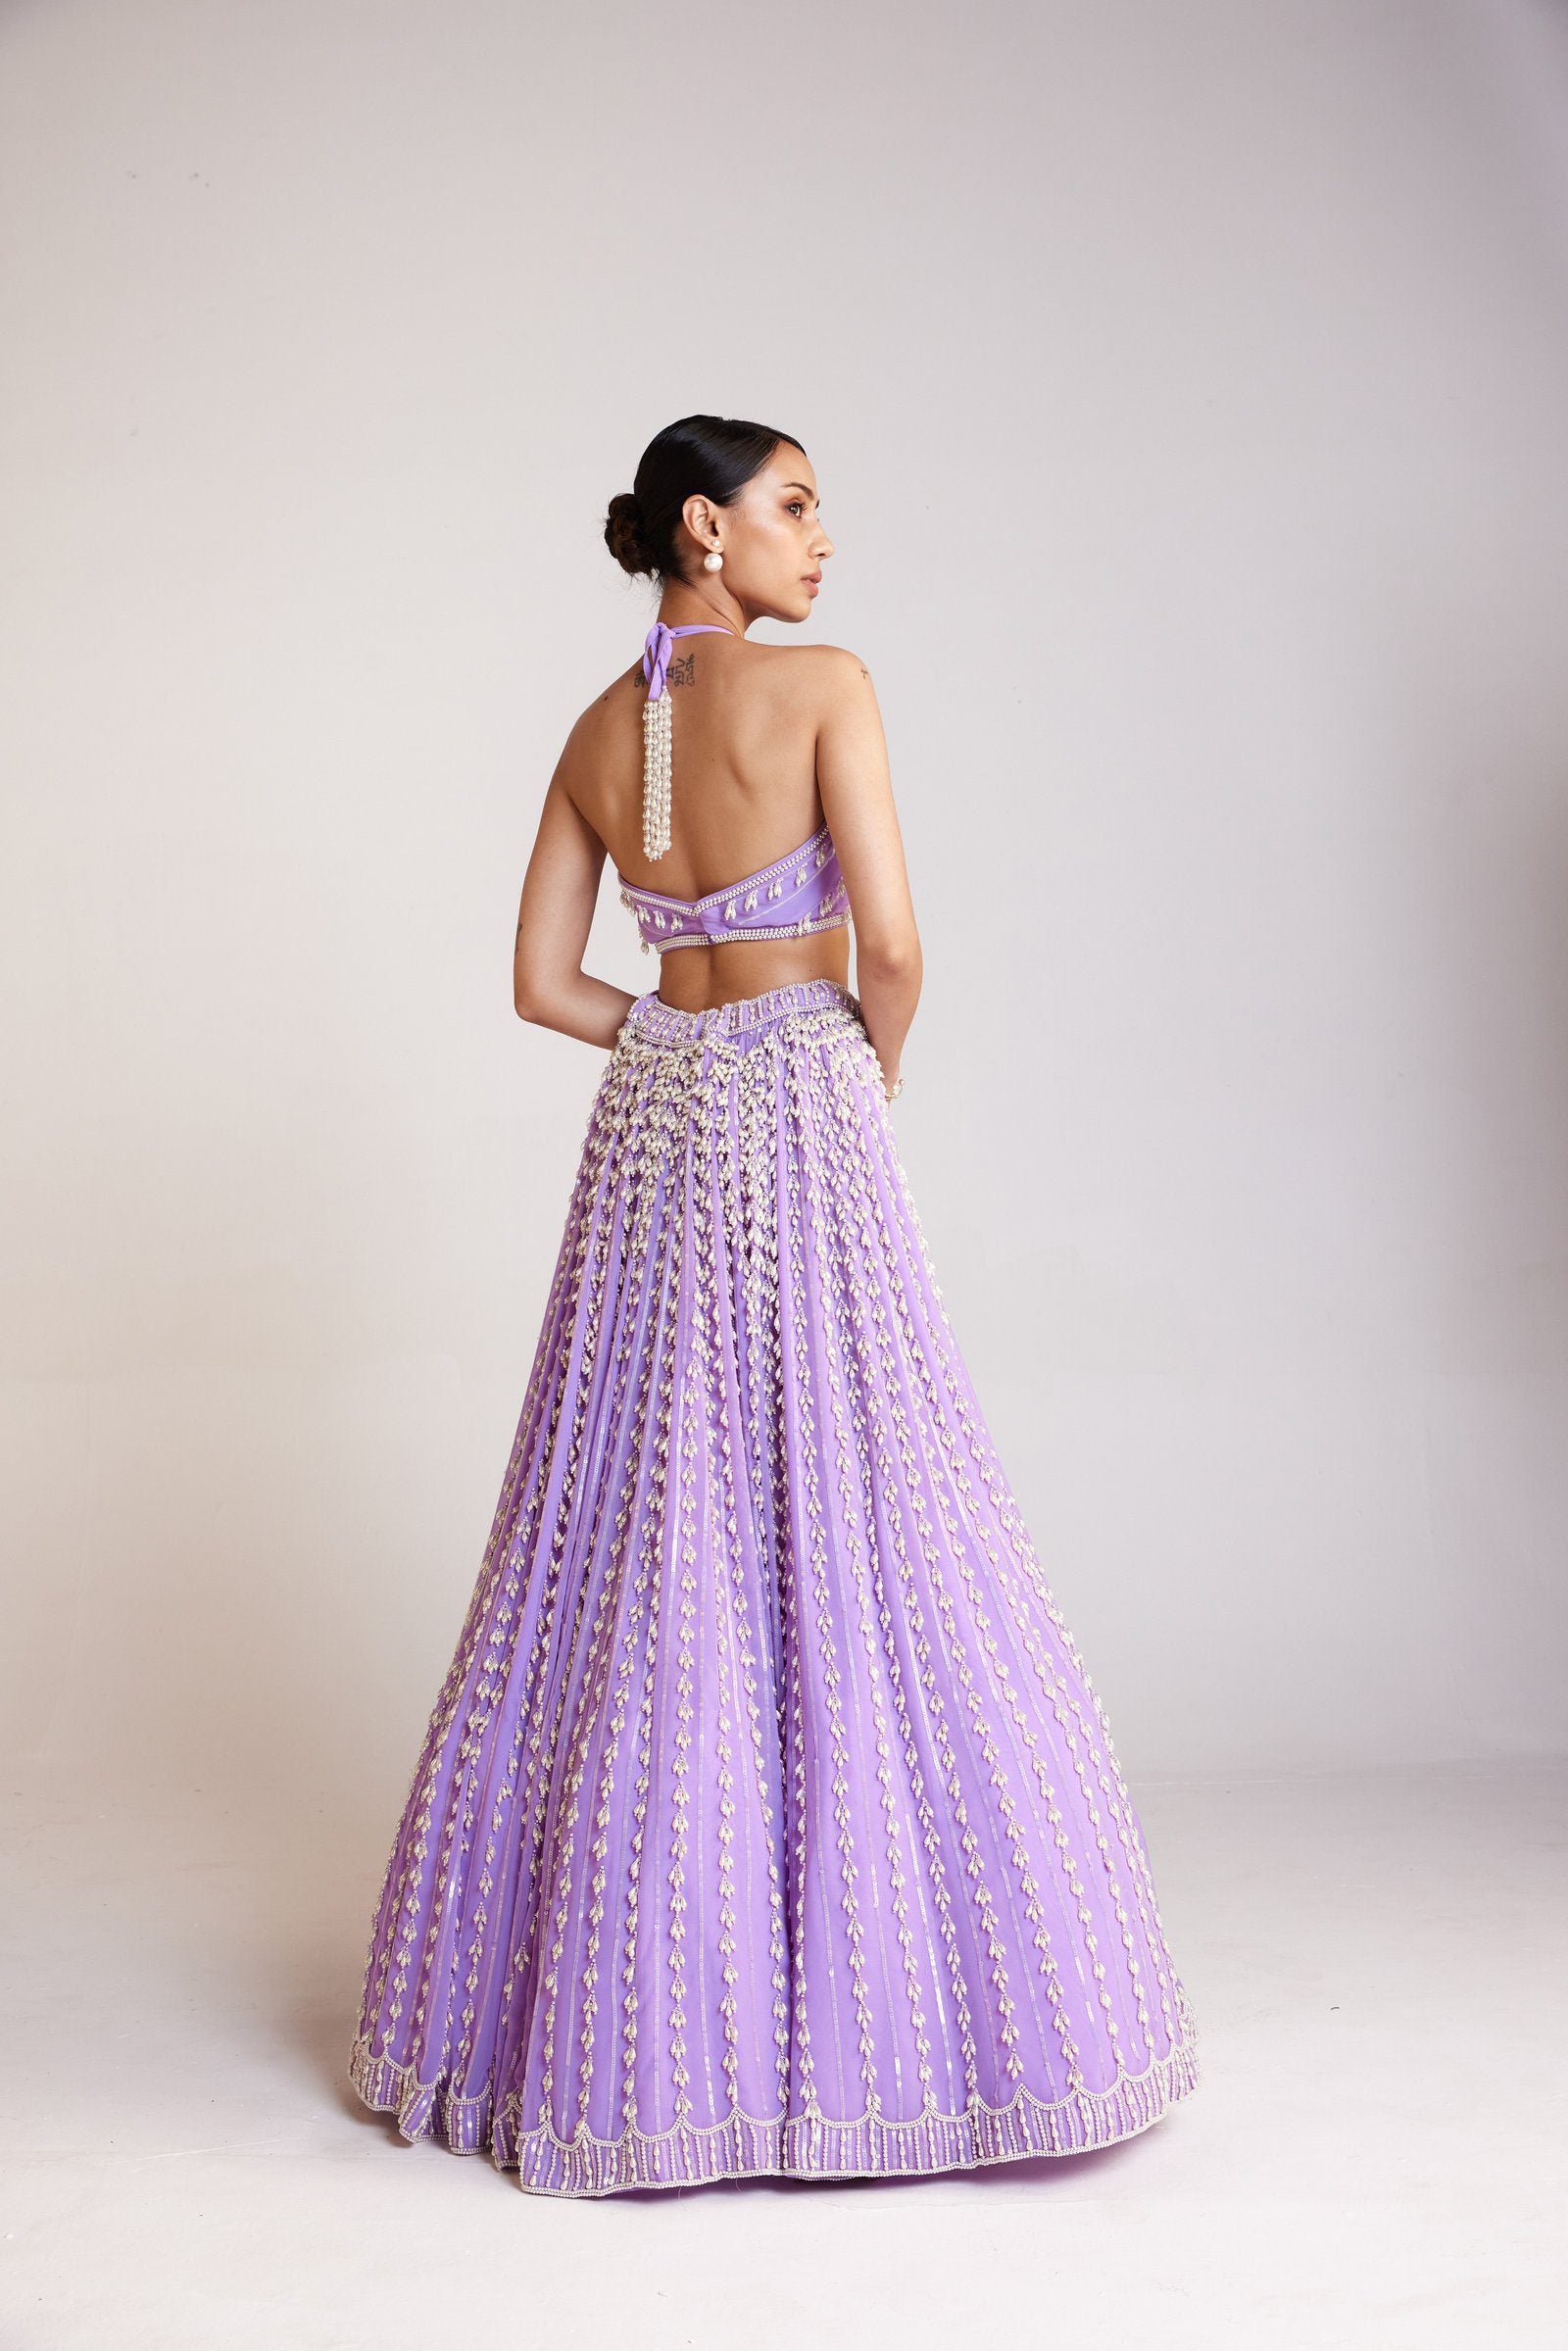 Vvani Vats,VAAW CRS 2409,Lilac Chandelier Pearl Halter Neck Crop Top Skirt Set